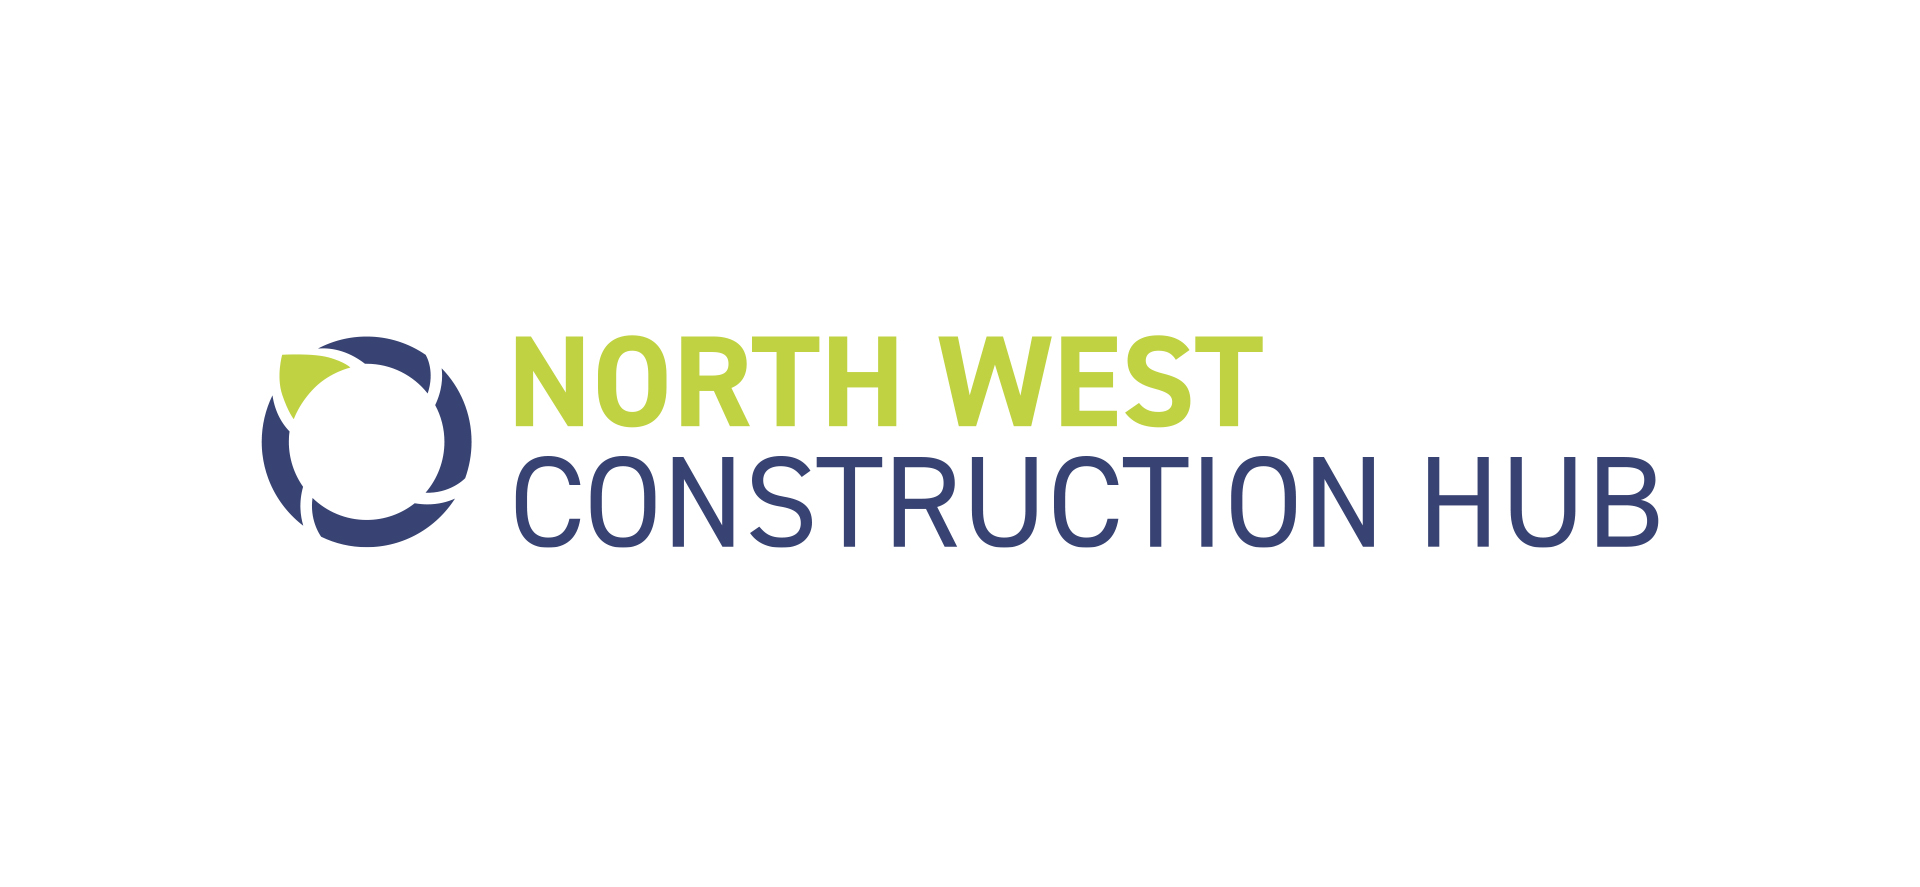 North West Construction Hub logo